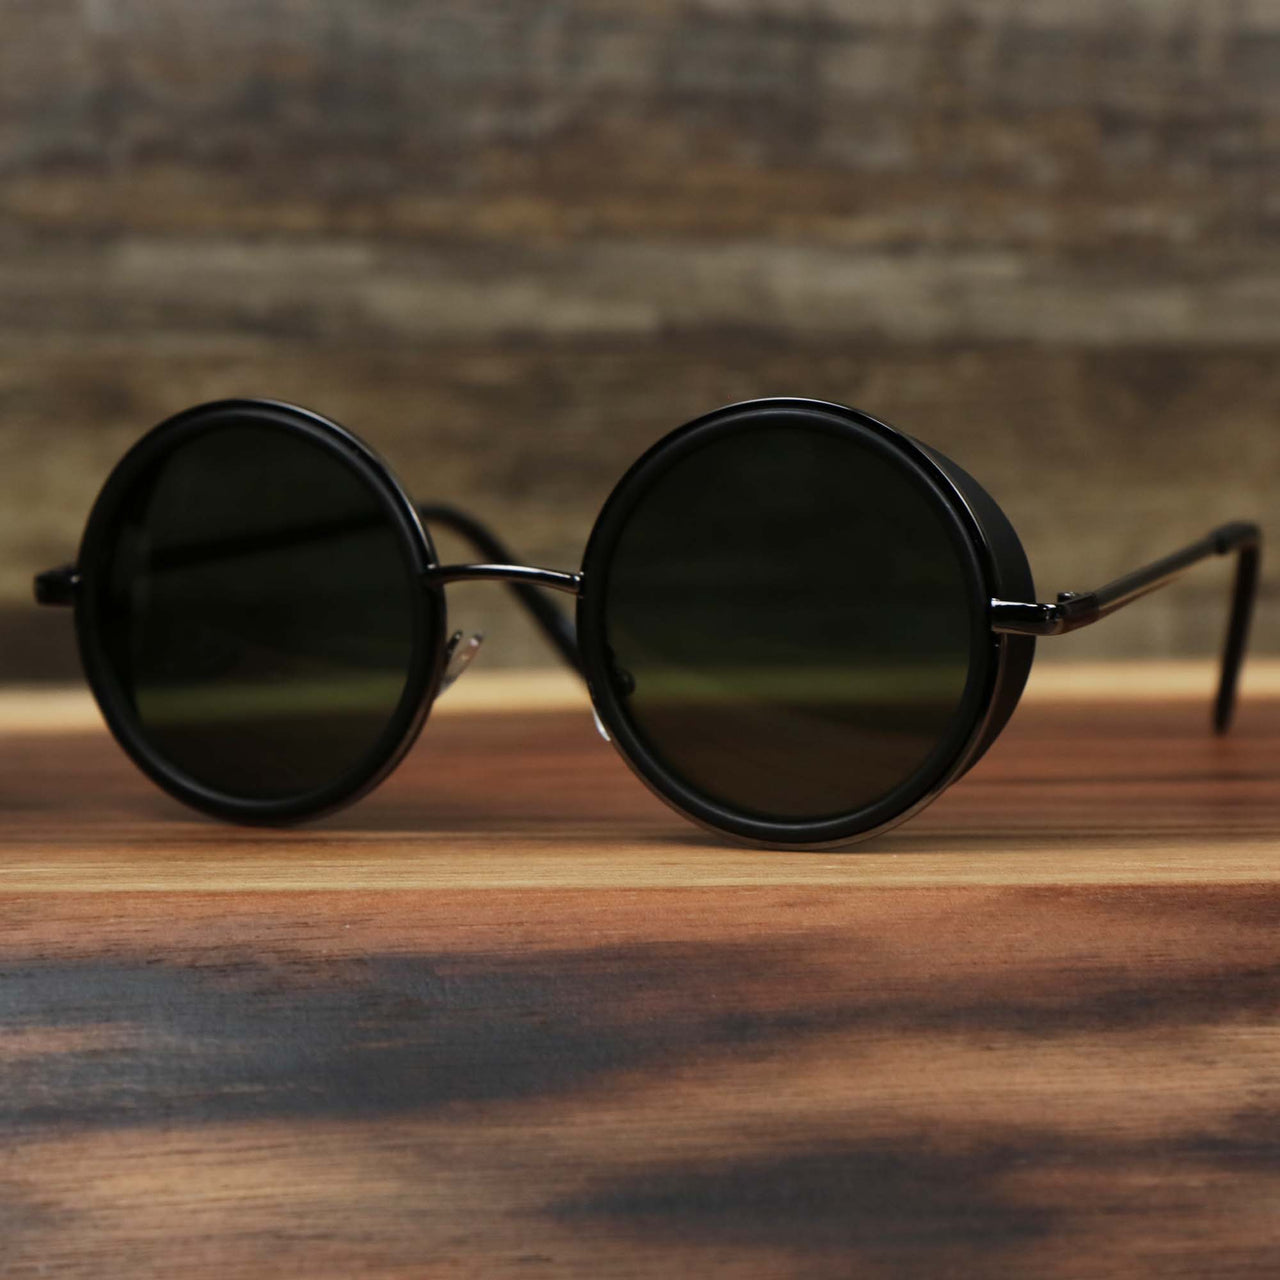 The Circle Frame Black Lens Sunglasses with Black Frame